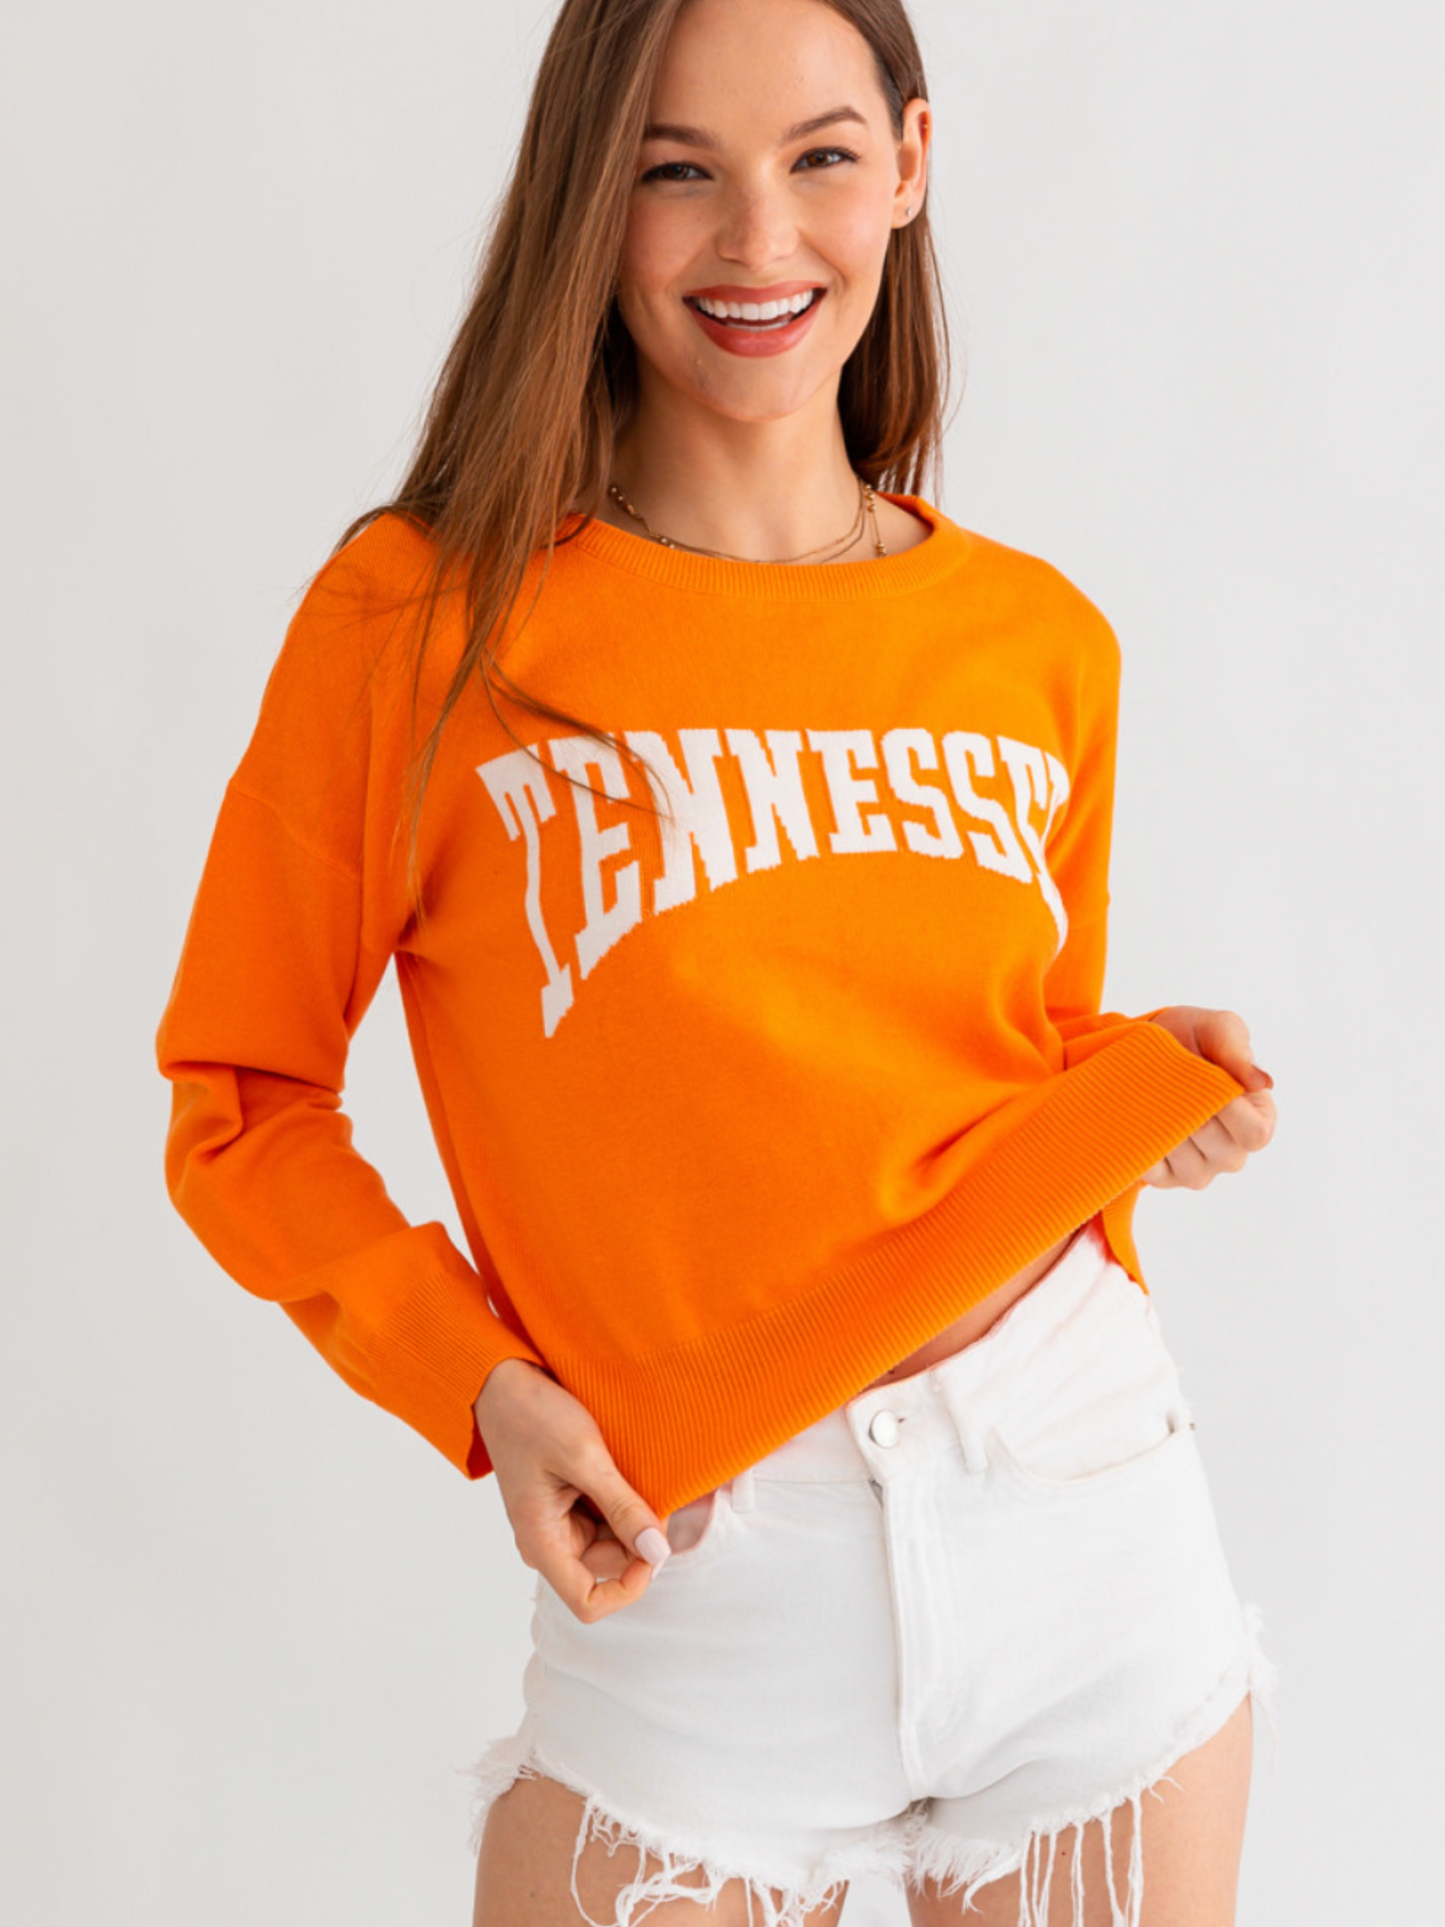 Tennessee Lightweight Sweater